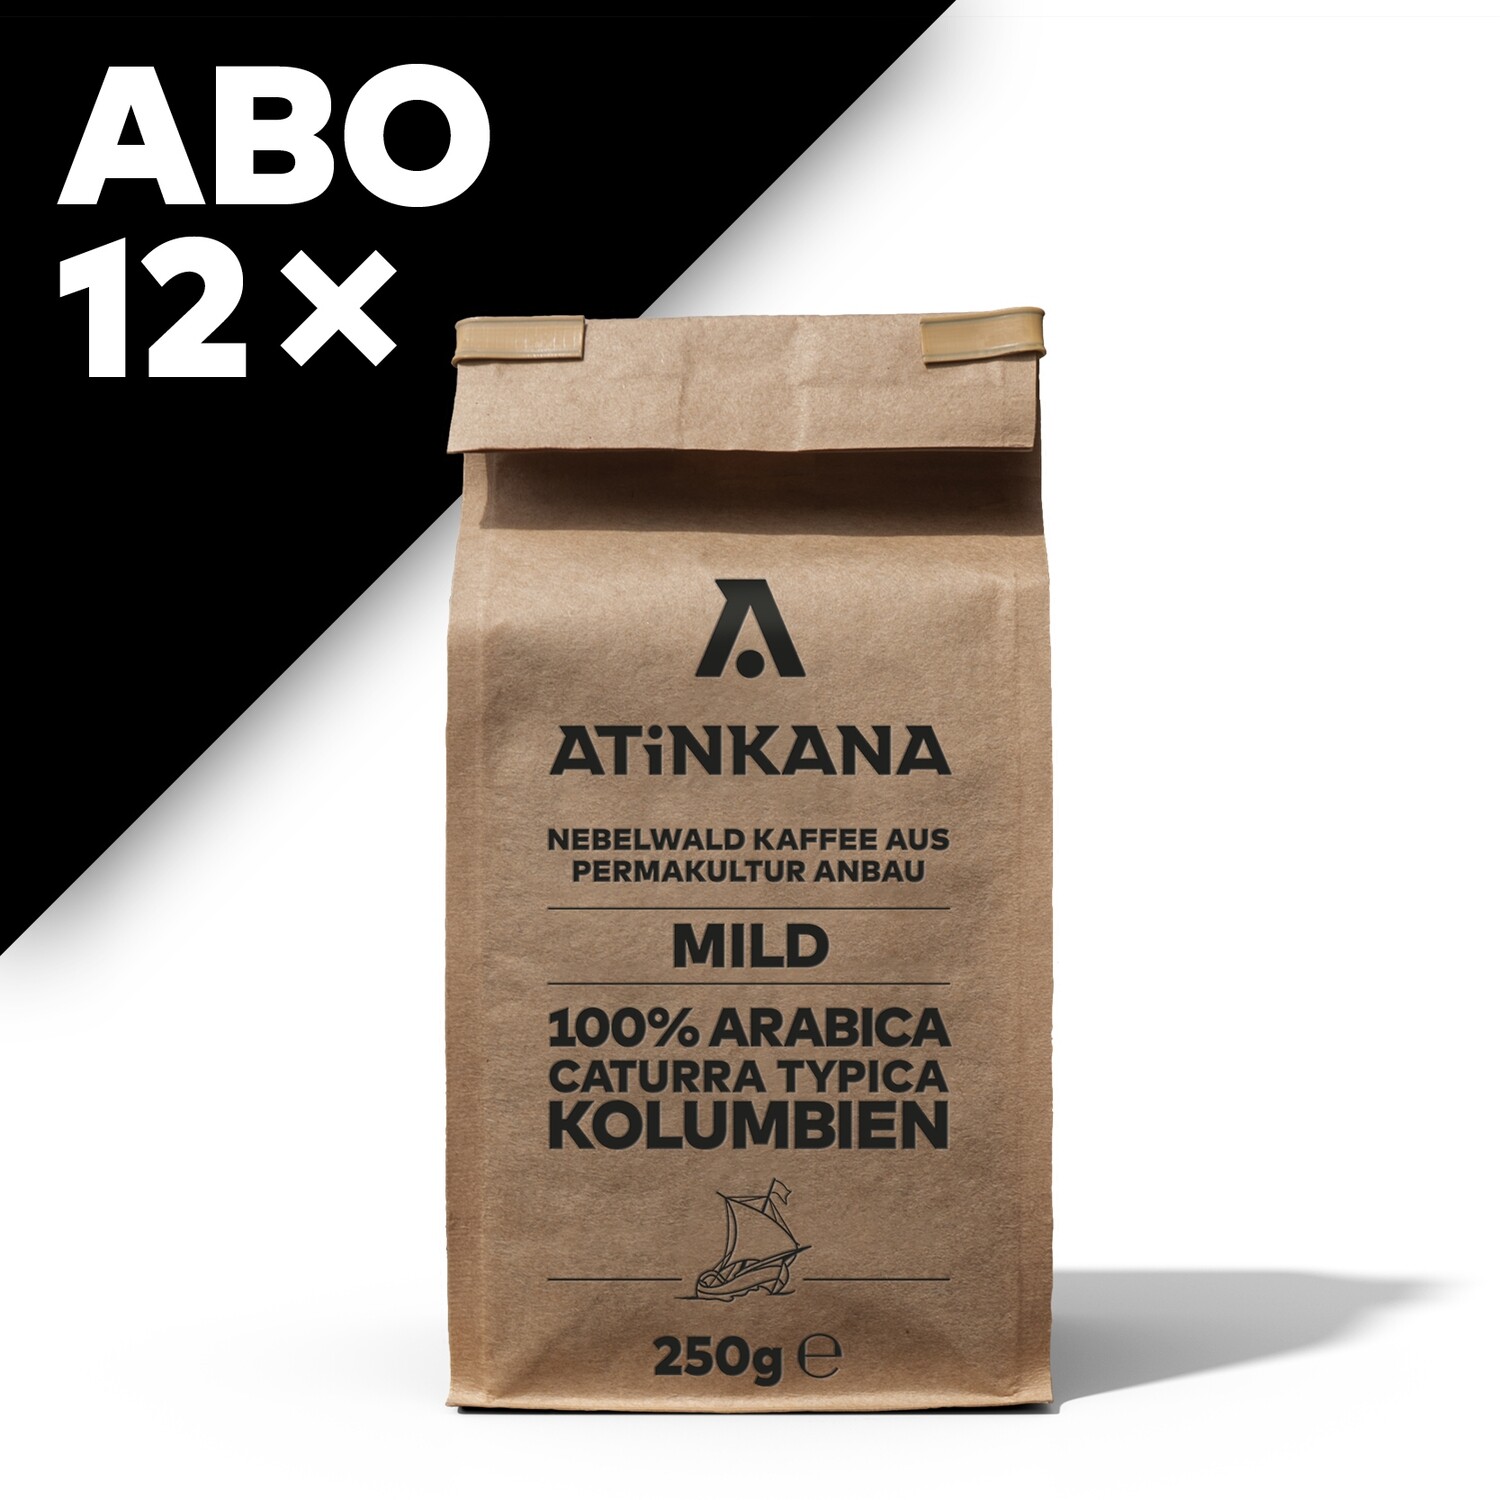 12 × Atinkana Kaffee 250g Mild ABO